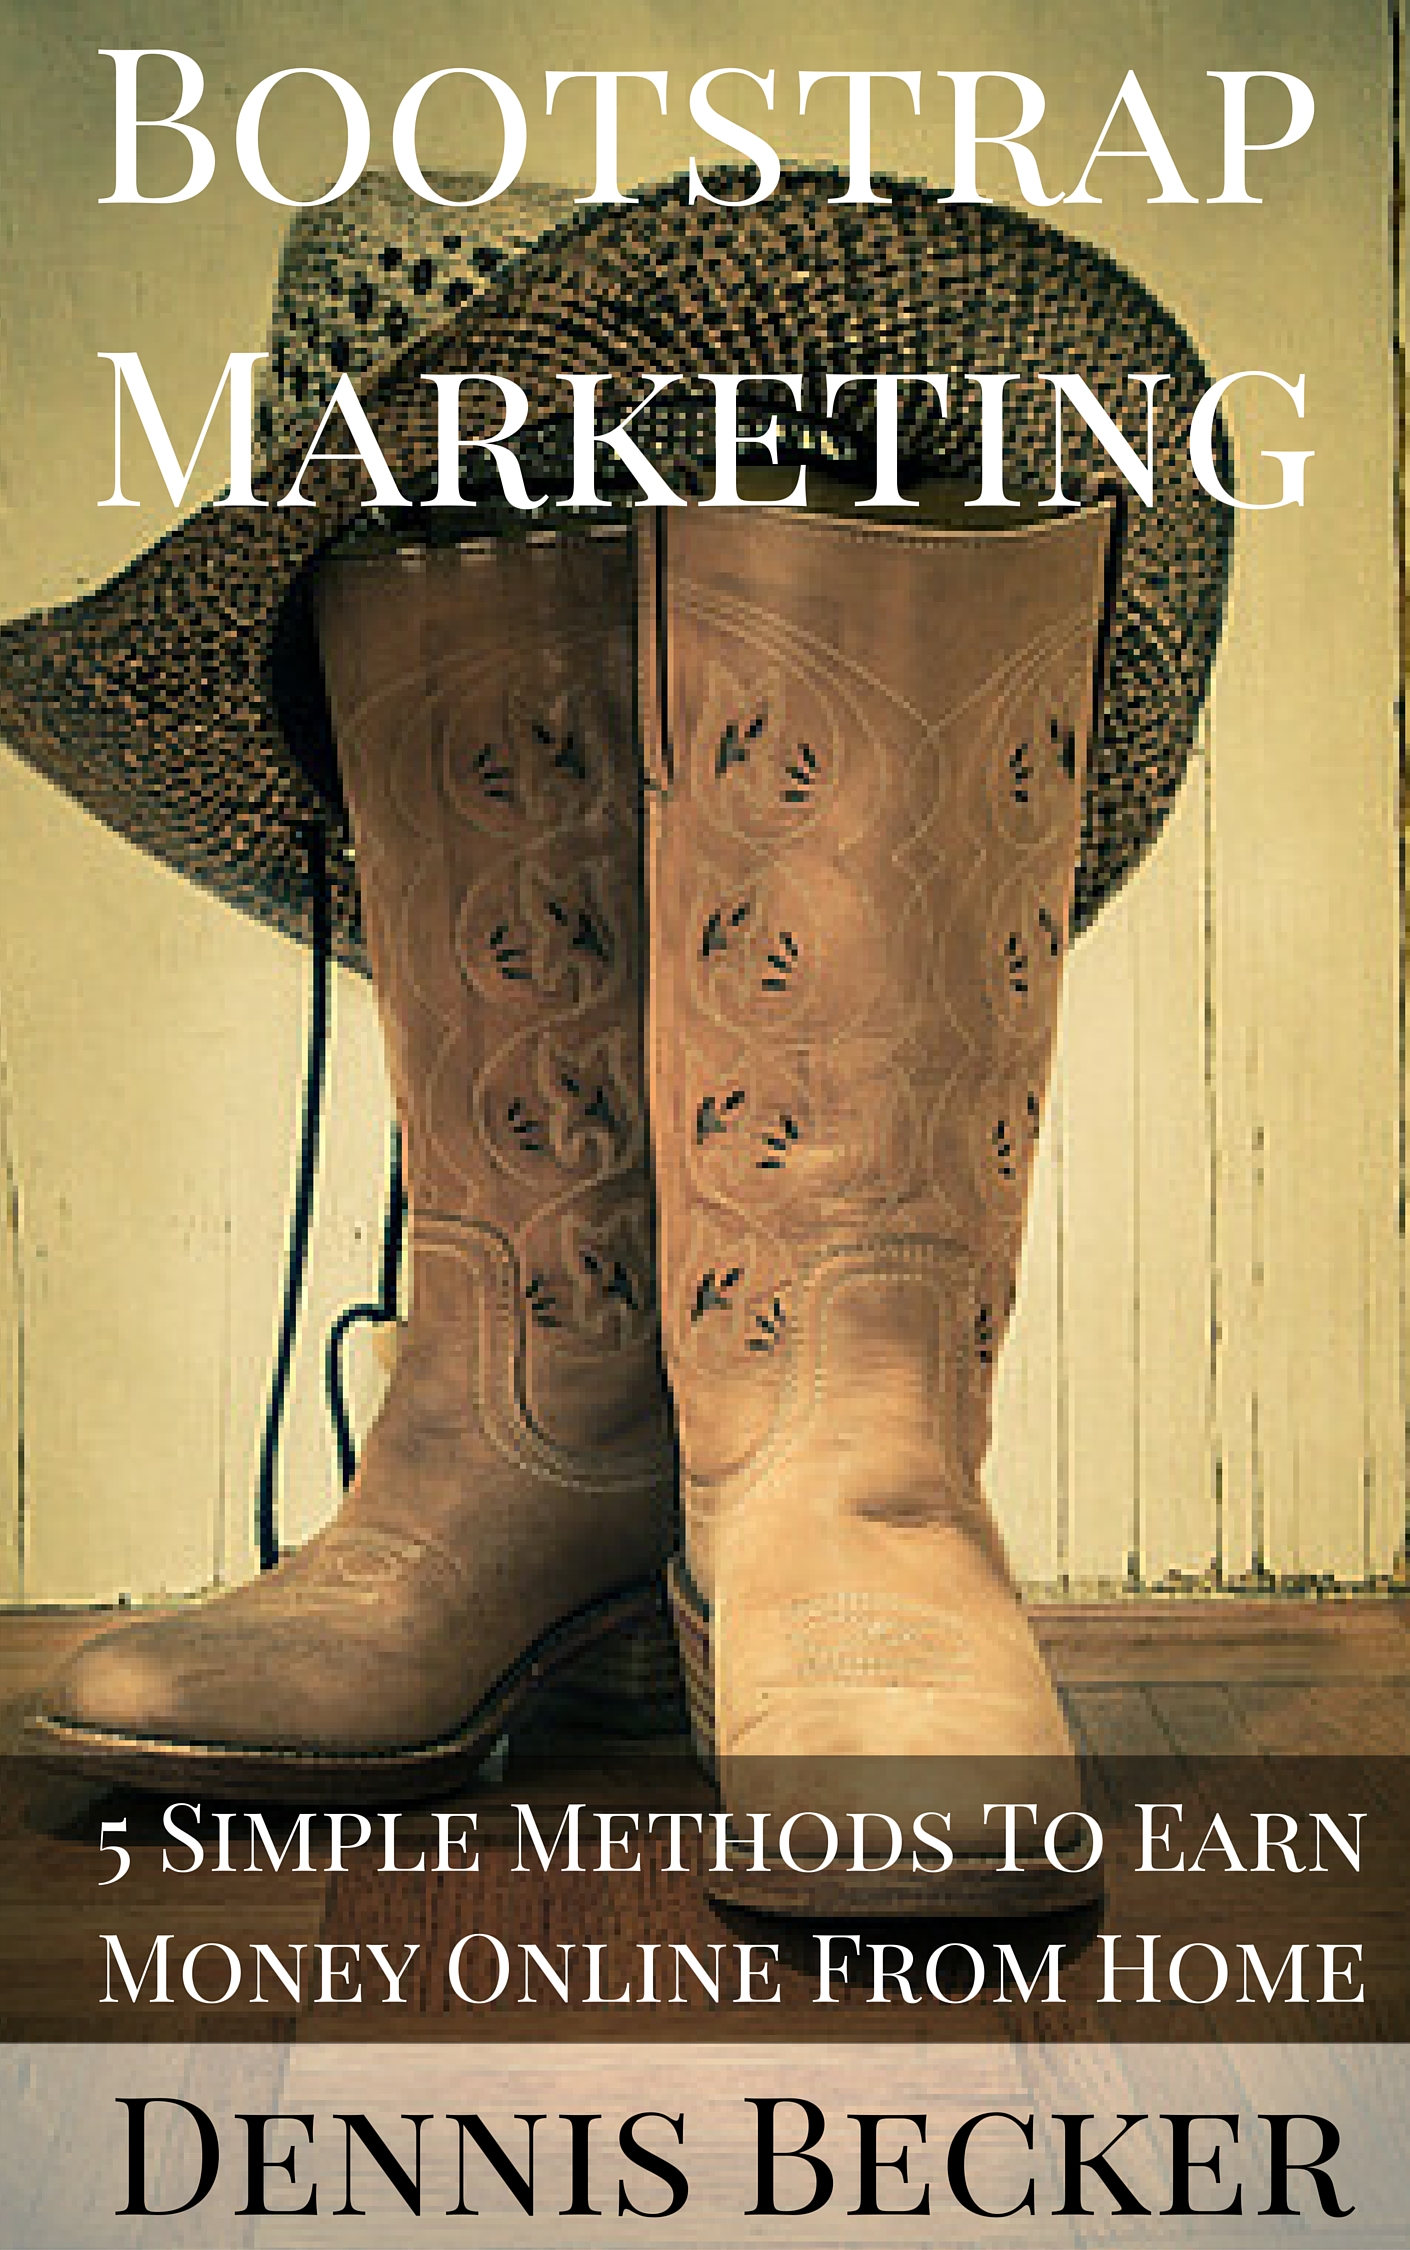 Bootstrap Marketing